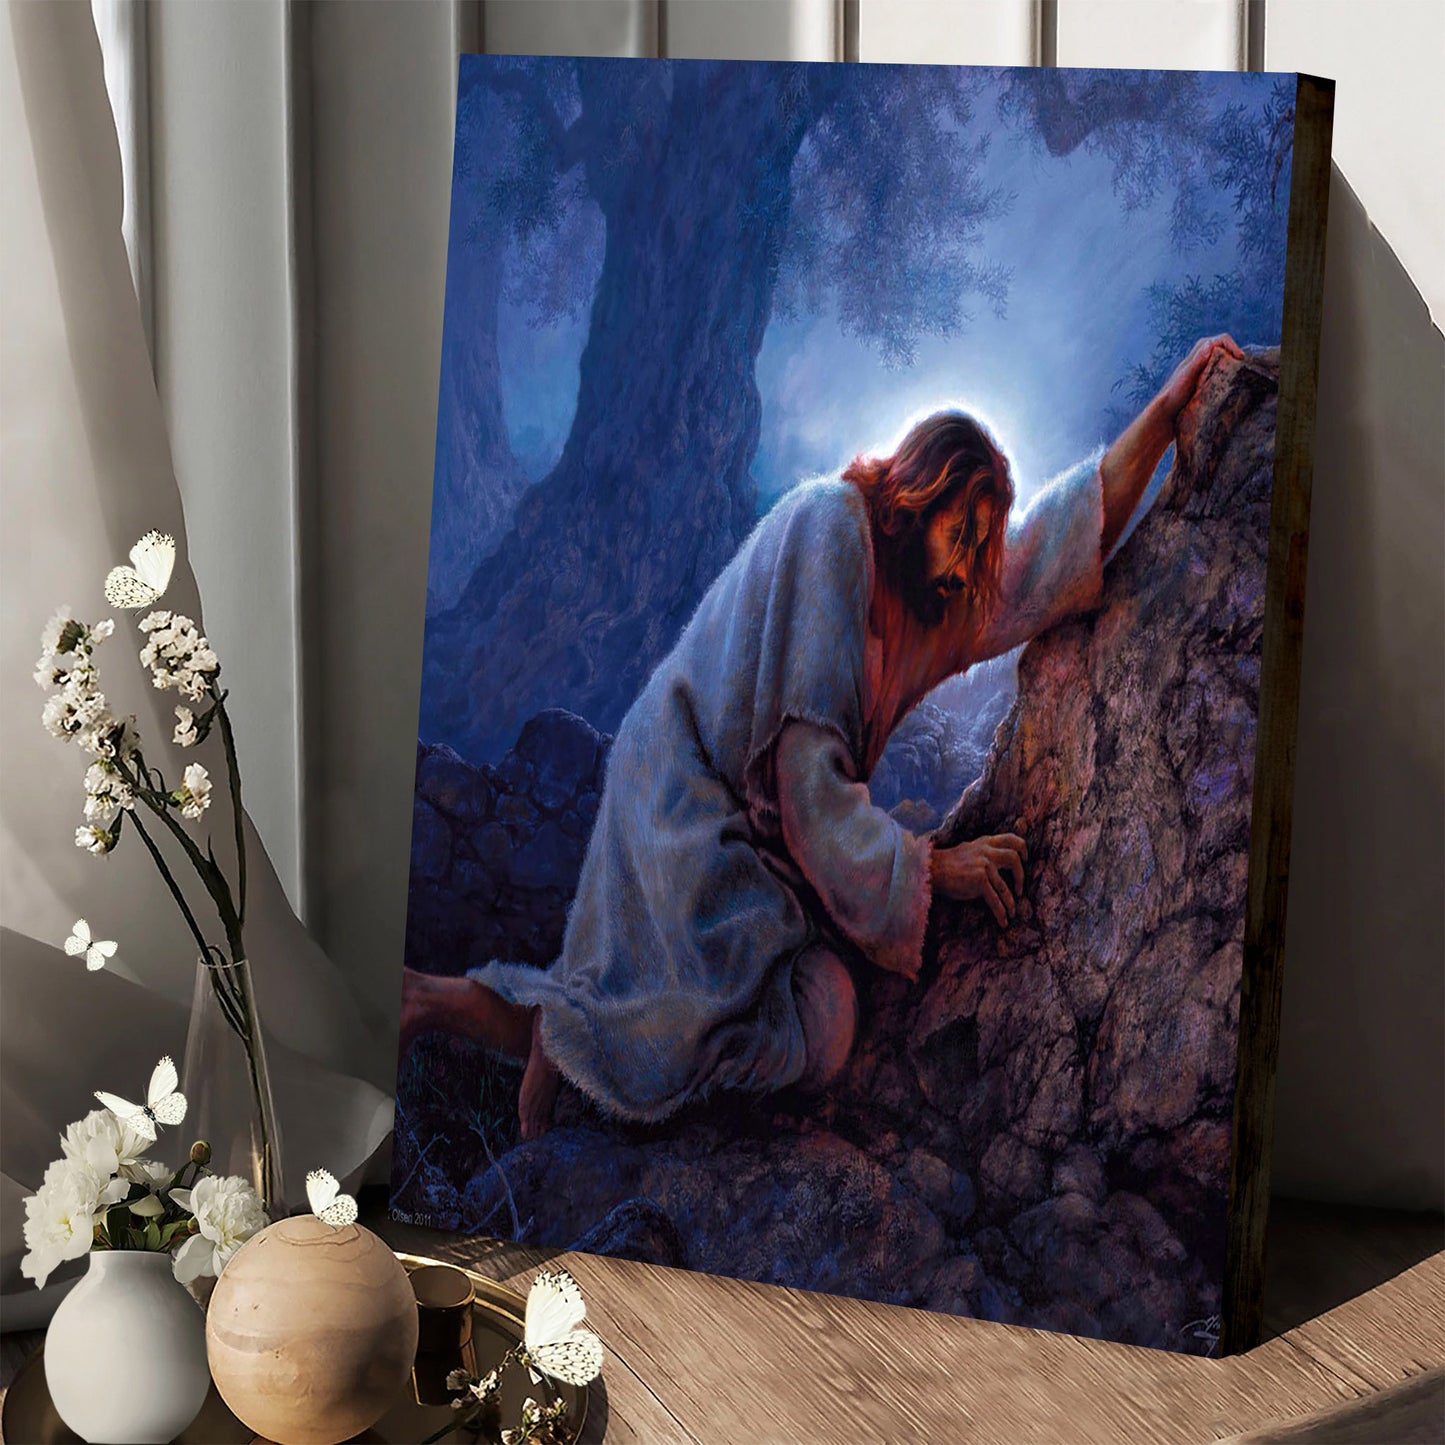 Jesus Gethsemane - Canvas Pictures - Jesus Canvas Art - Christian Wall Art